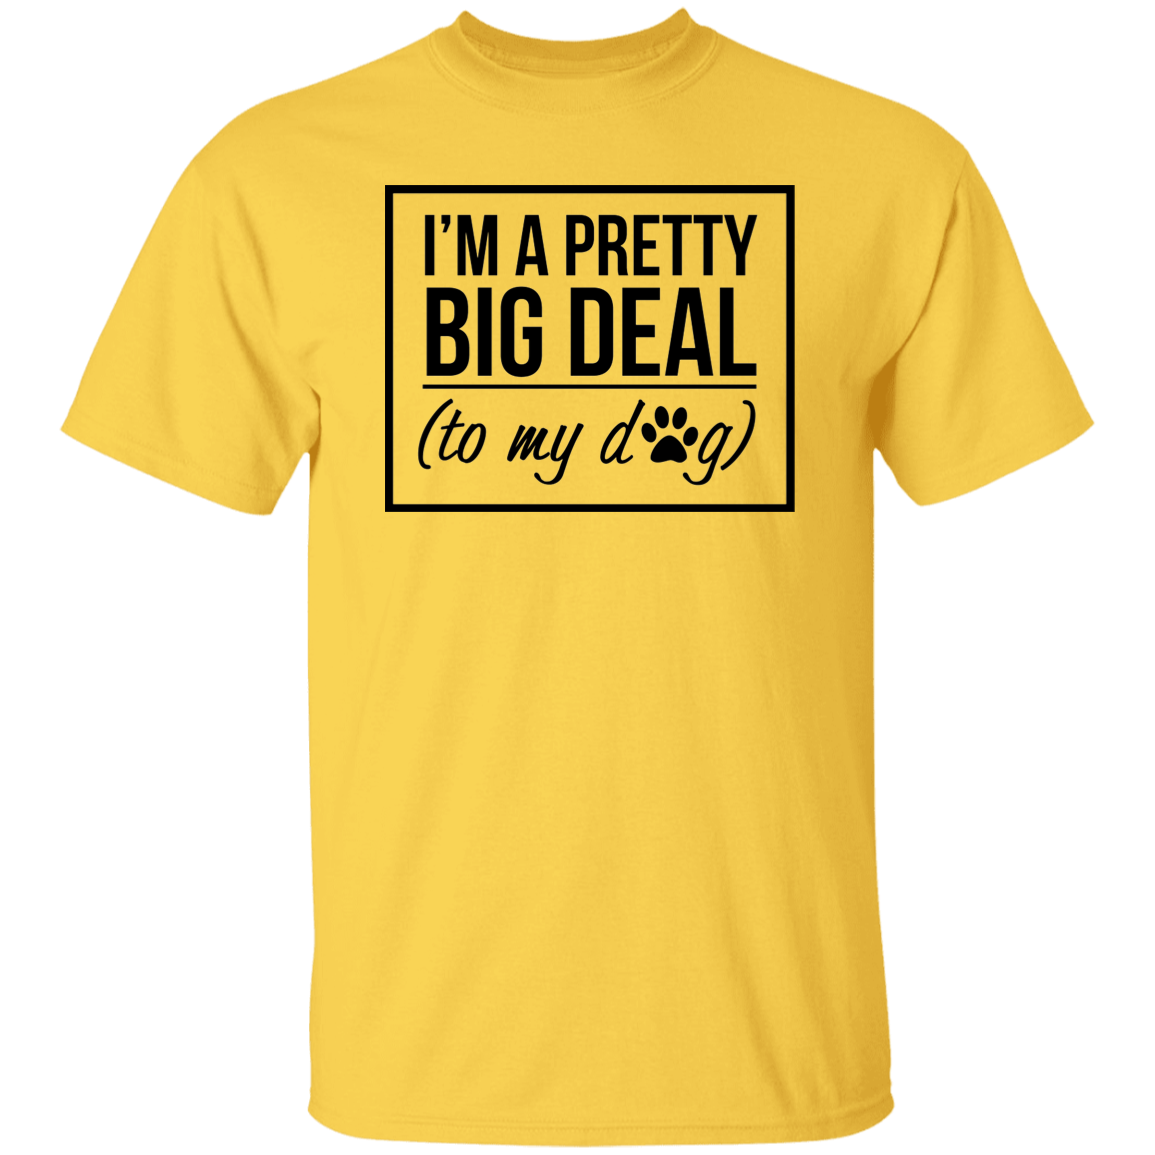 I'm A Pretty Big Deal (to my dog) 5.3 oz. T-Shirt